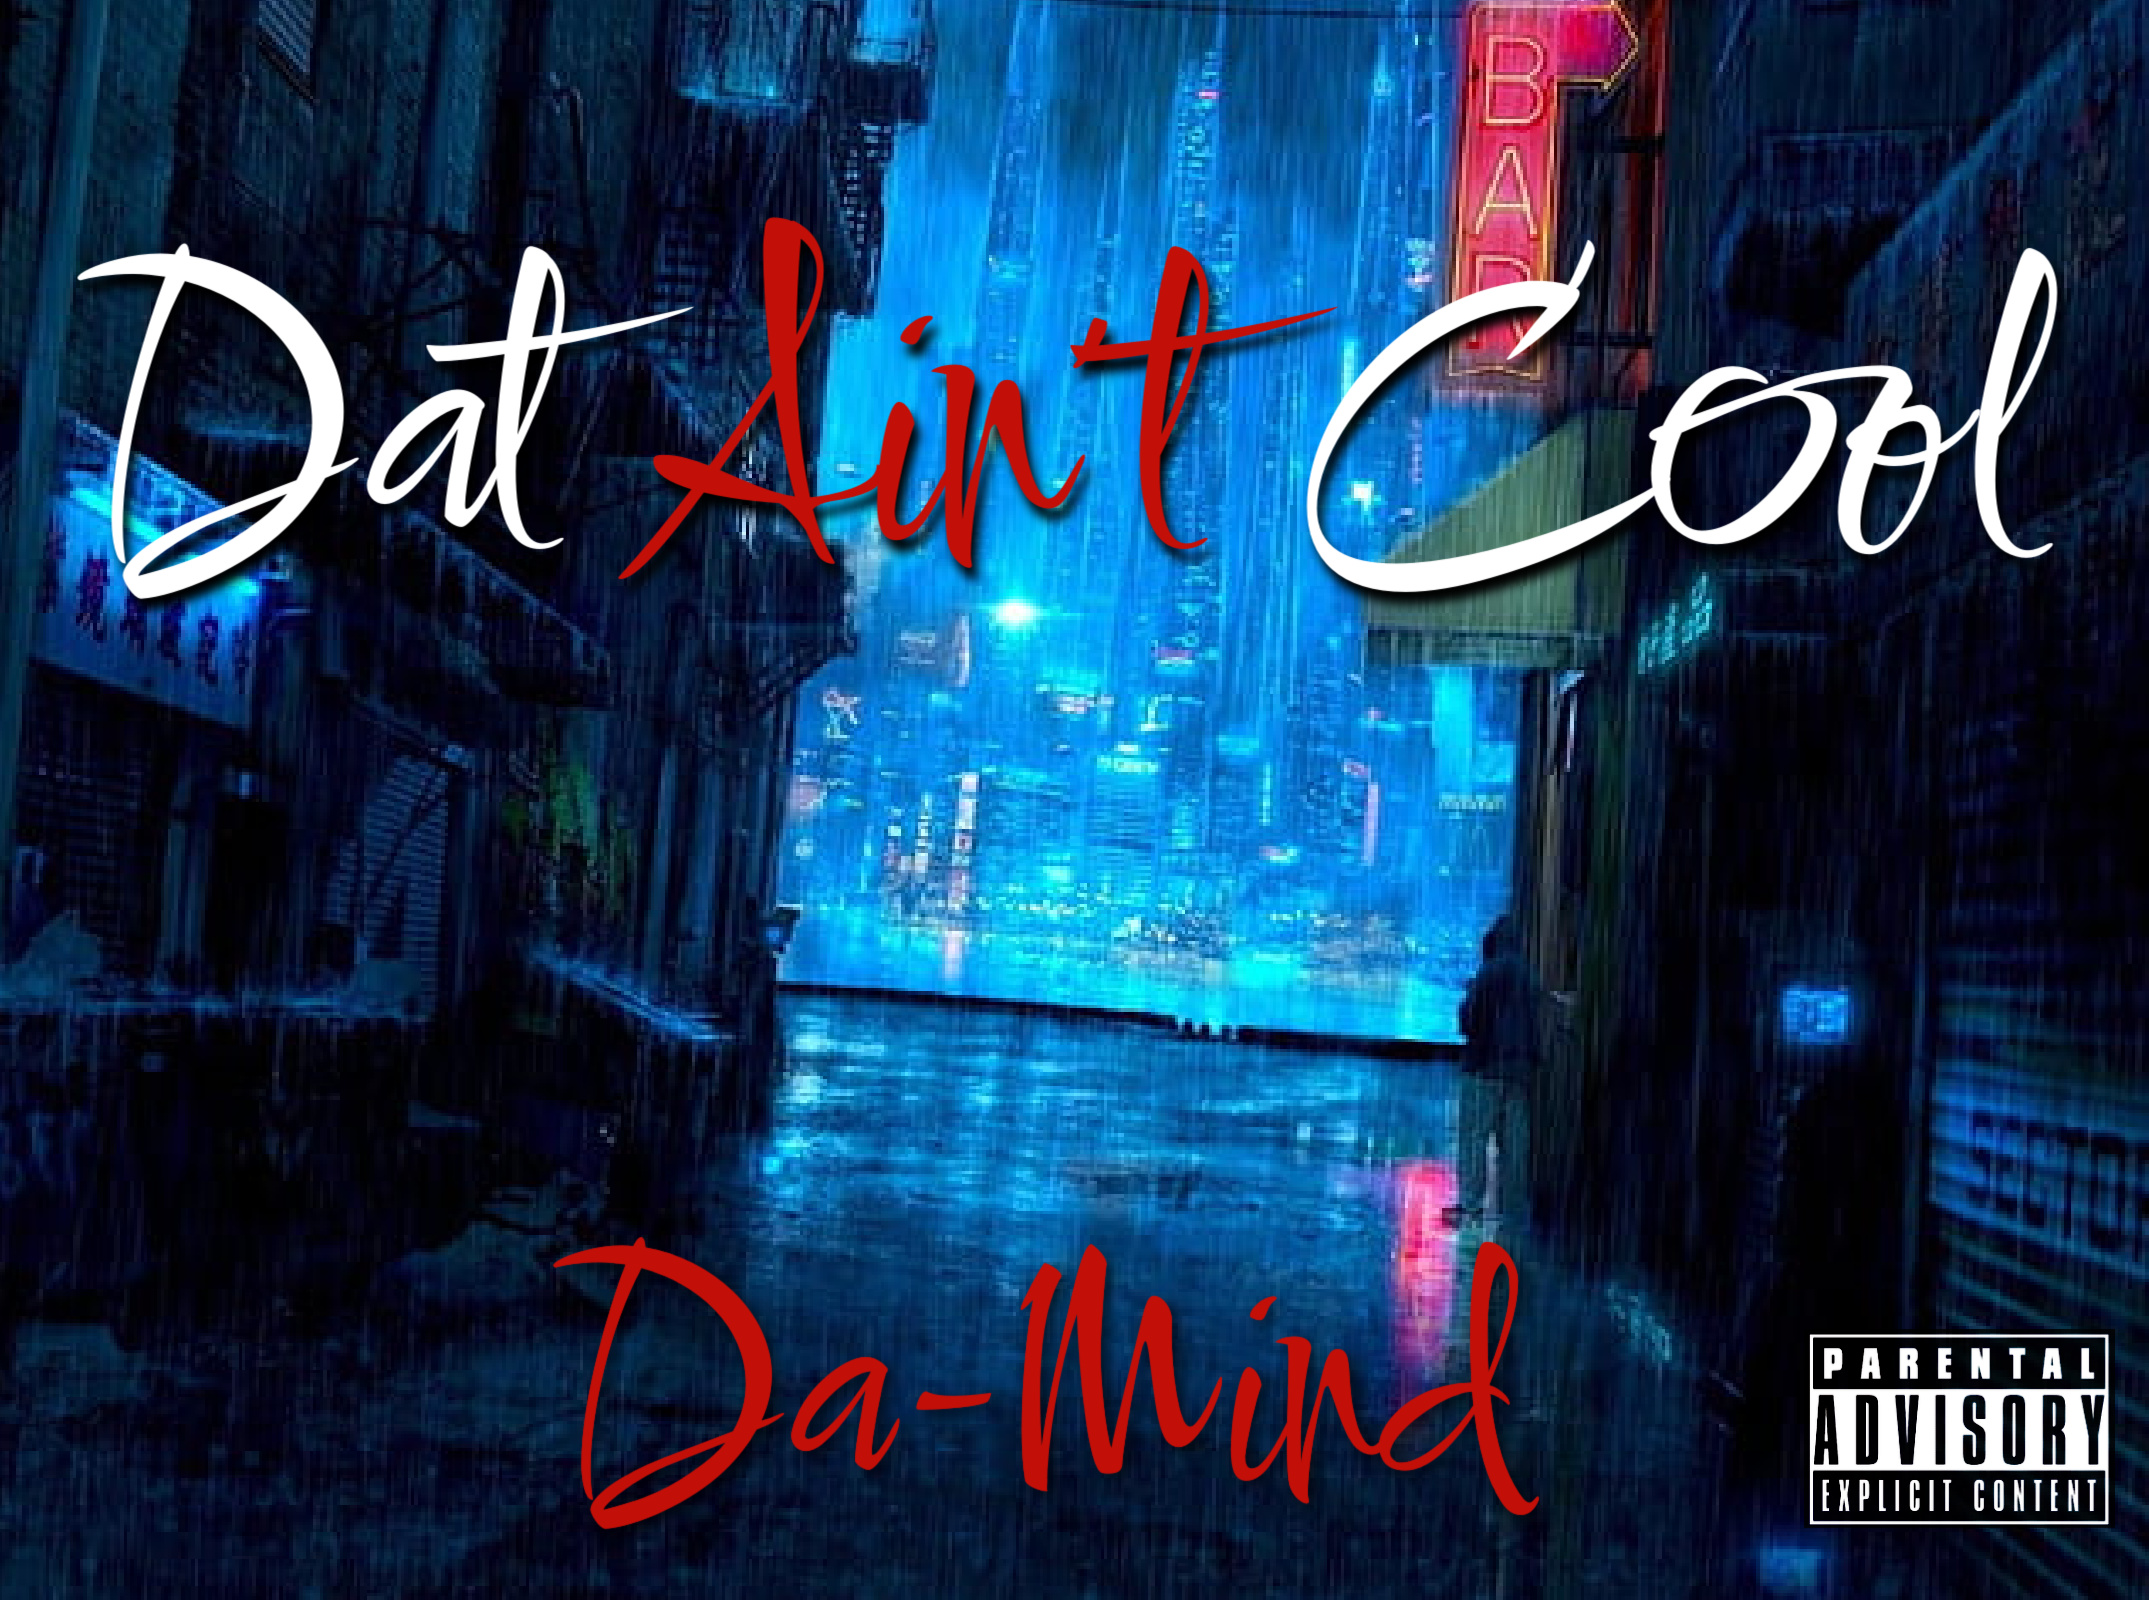 Da-Mind’s ‘Dat Ain’t Cool’ Takes Hip-Hop by Storm, Inspiring Positive Change